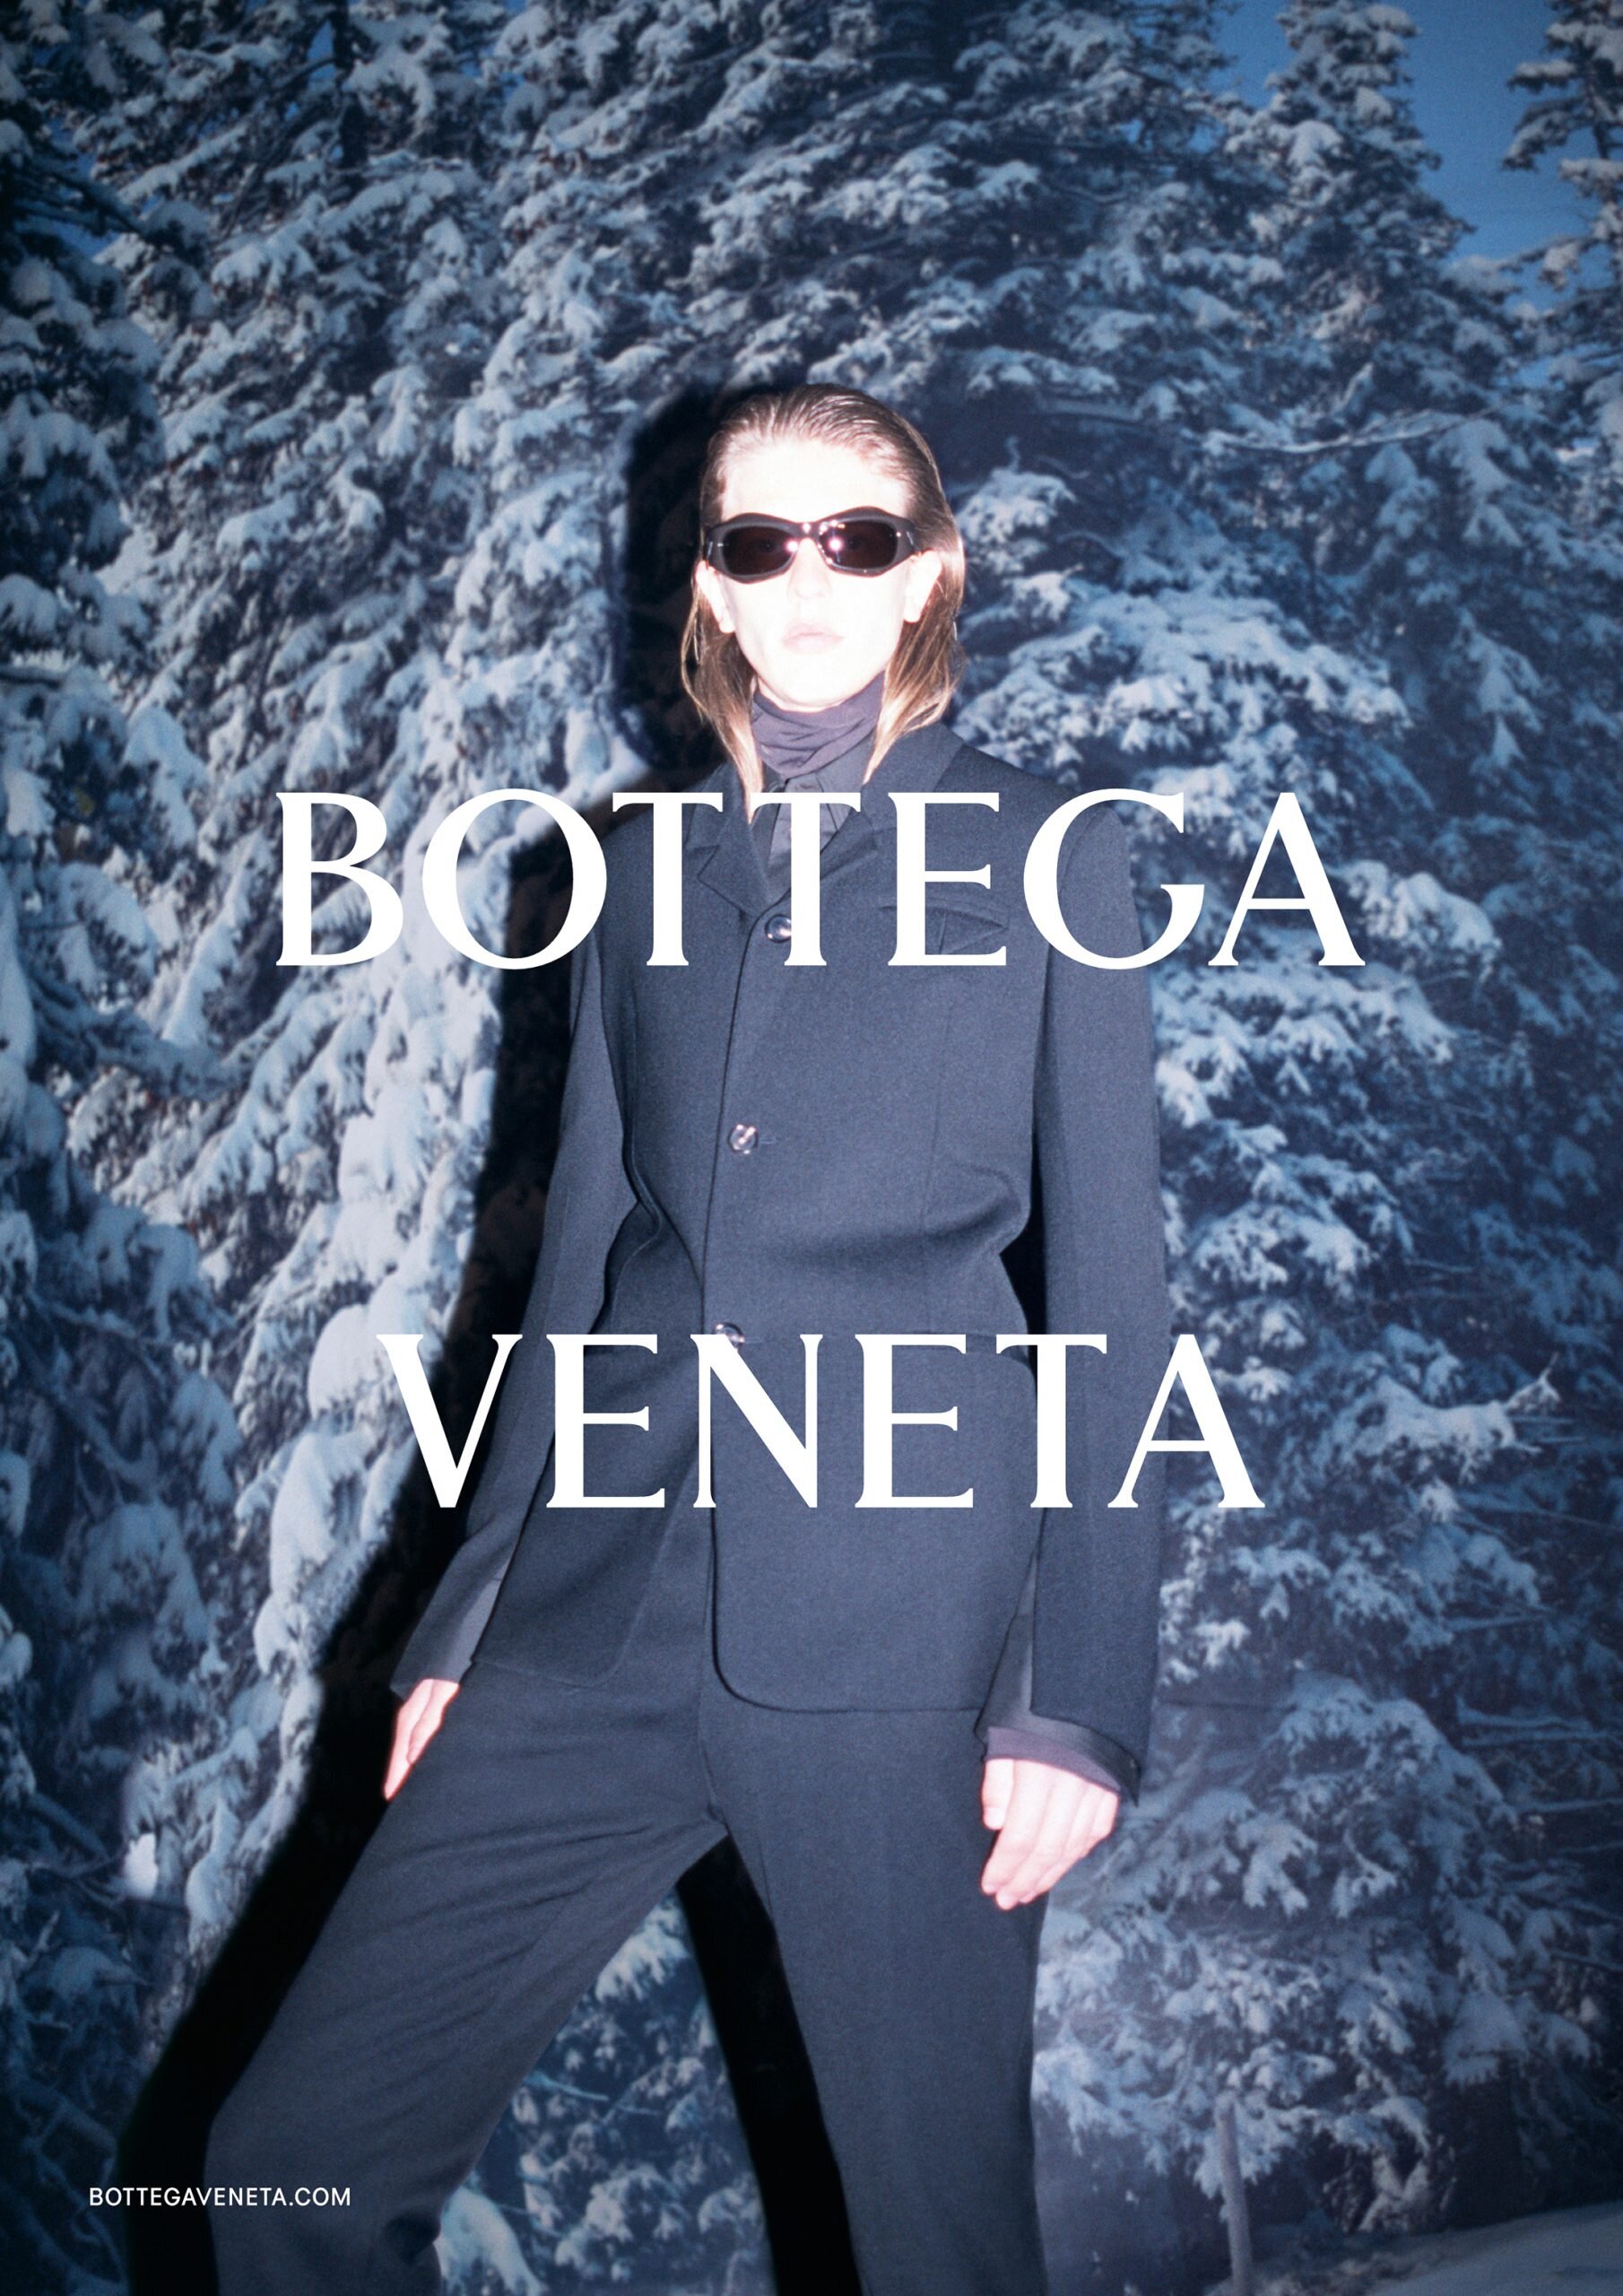 Bottega Veneta Fall 2020 by Tyrone Lebon (5).jpg